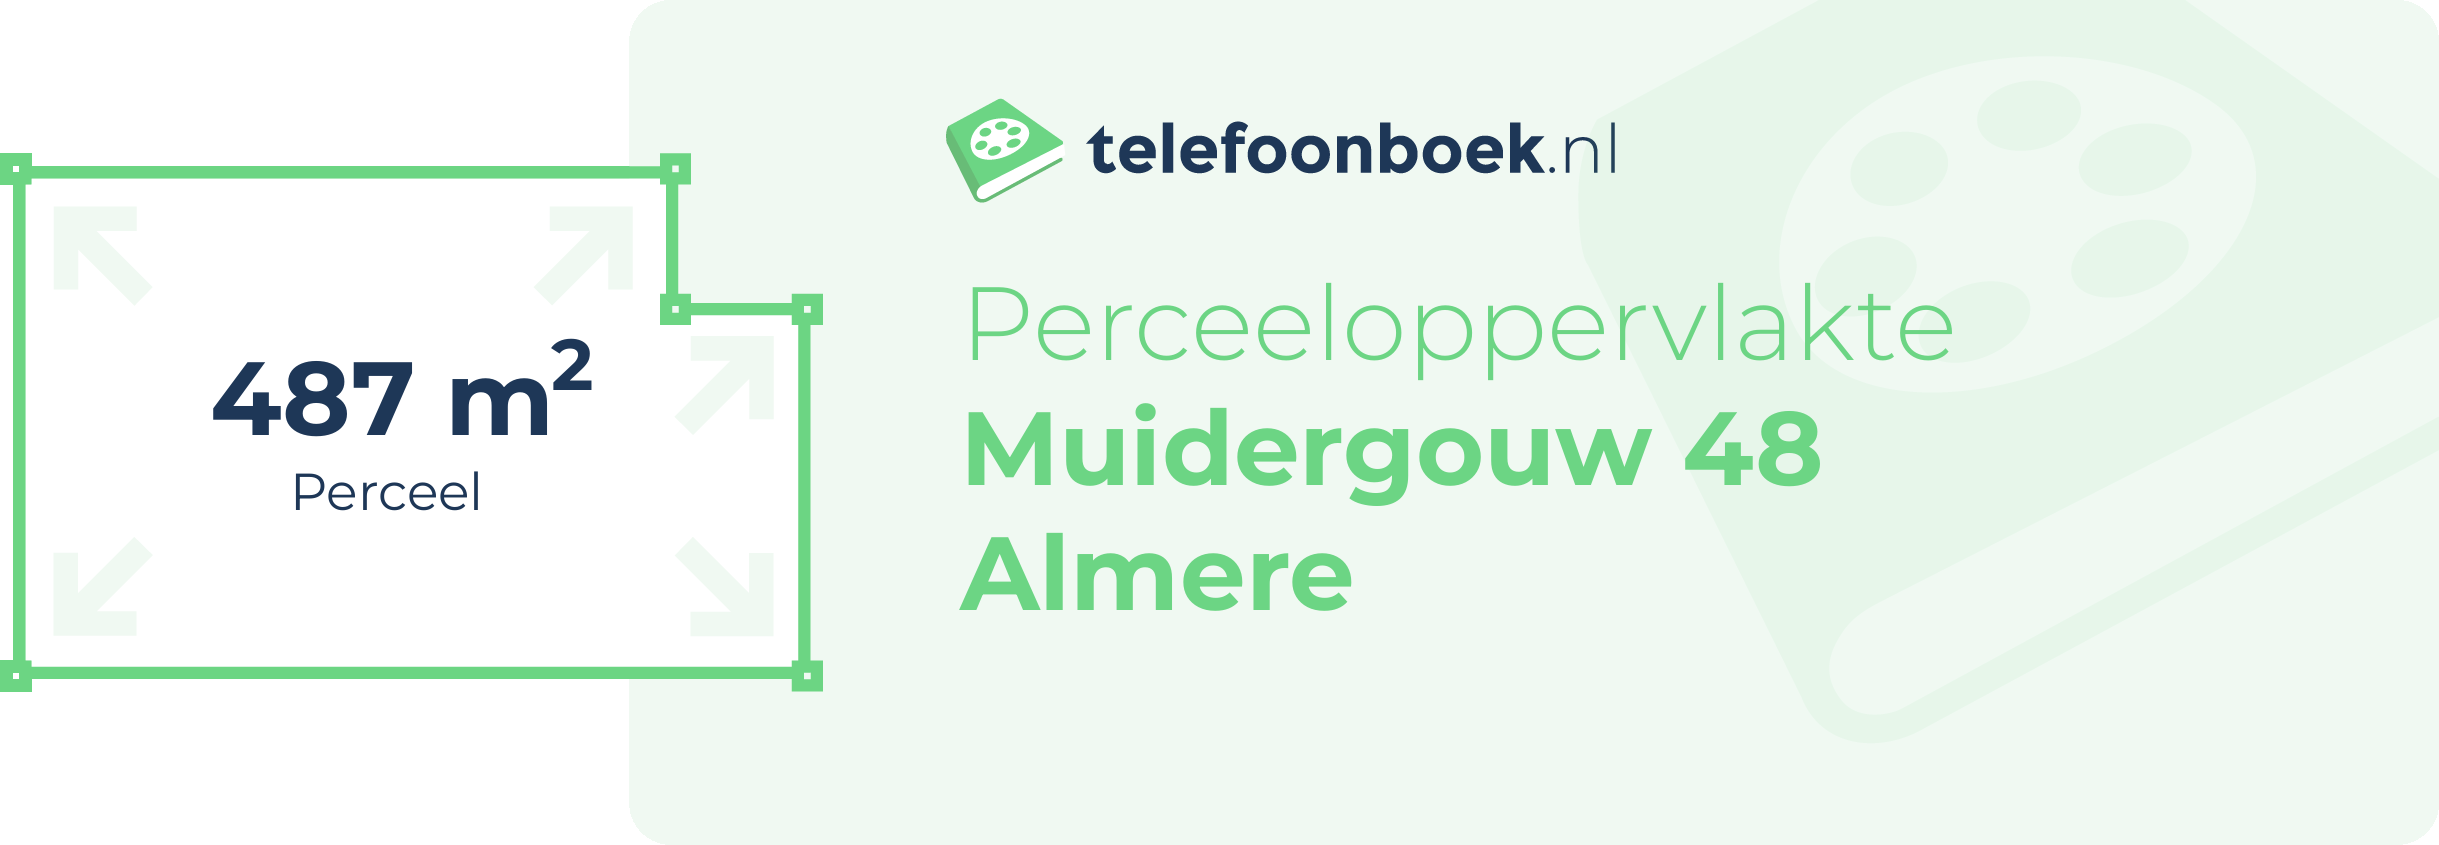 Perceeloppervlakte Muidergouw 48 Almere